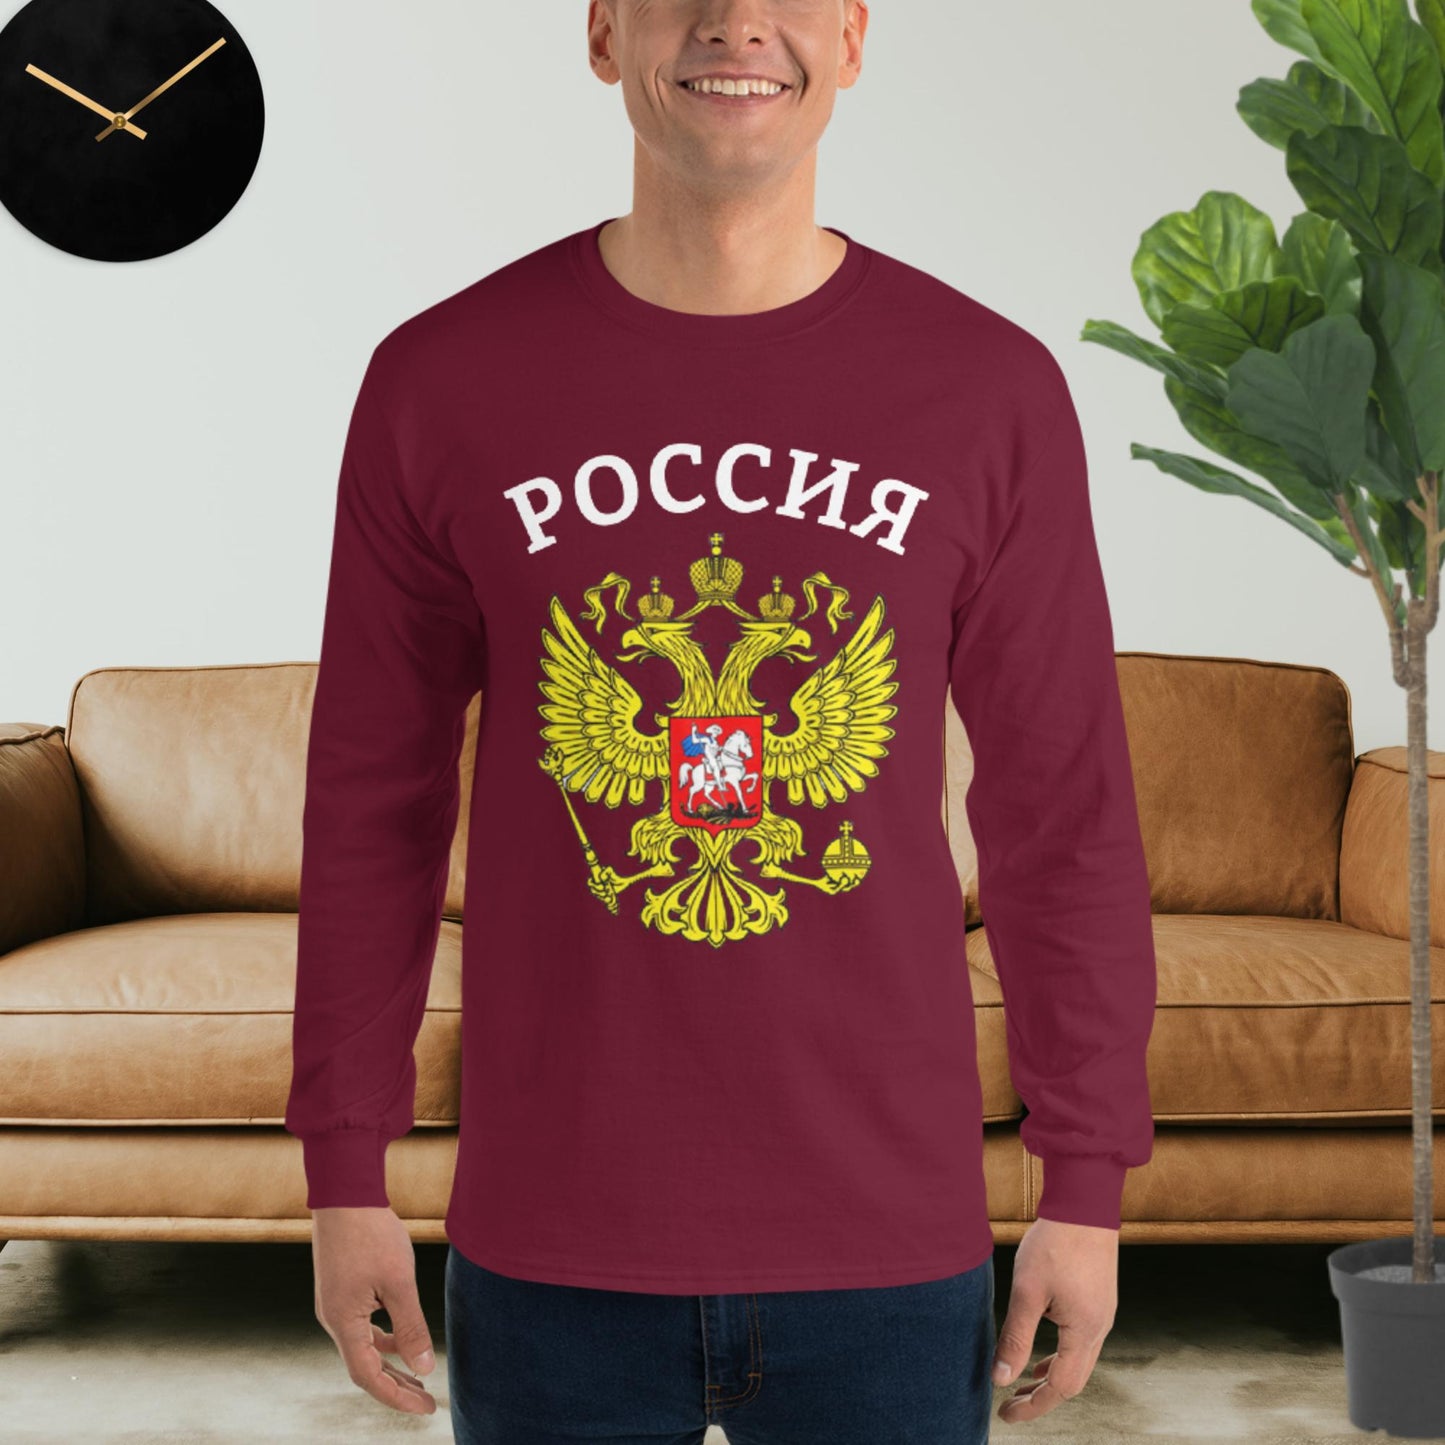 Herren-Langarmshirt mit Russland-Wappen in verschiedenen Farben